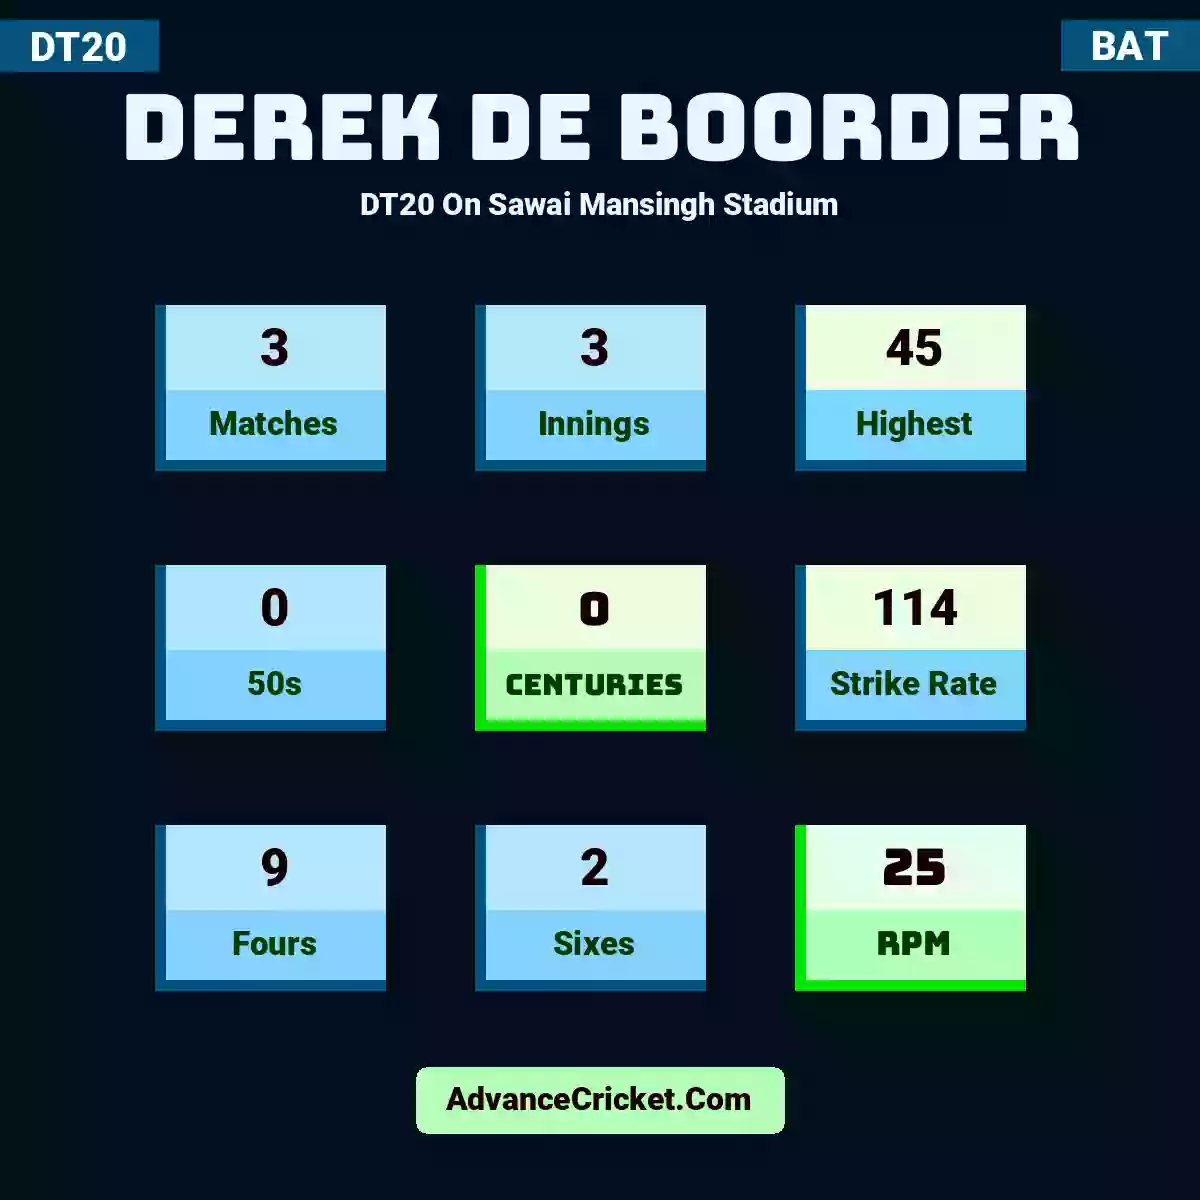 Derek de Boorder DT20  On Sawai Mansingh Stadium, Derek de Boorder played 3 matches, scored 45 runs as highest, 0 half-centuries, and 0 centuries, with a strike rate of 114. D.Boorder hit 9 fours and 2 sixes, with an RPM of 25.